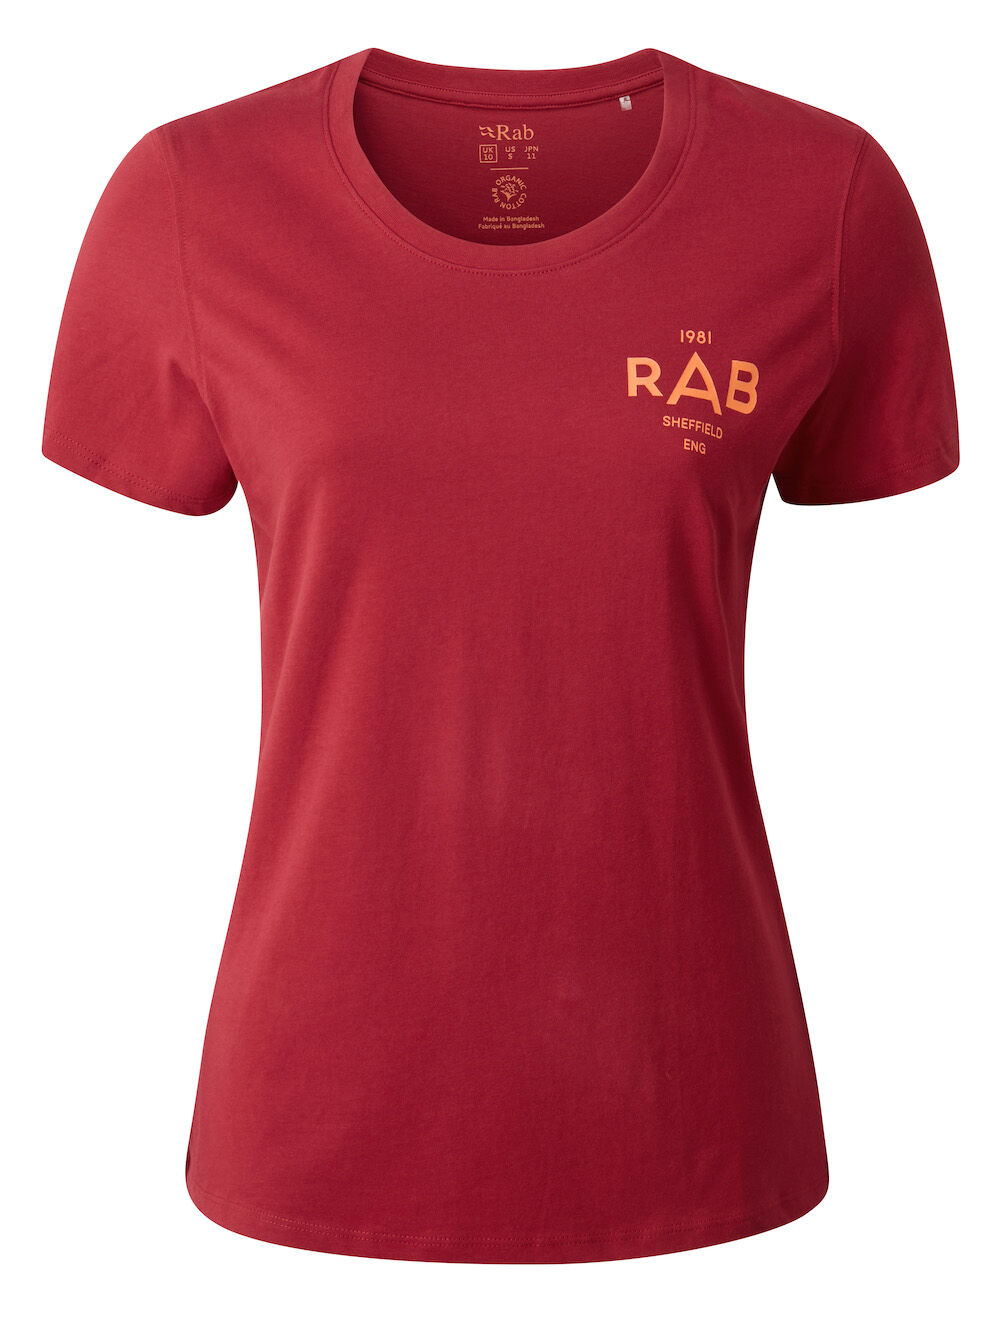 Rab - Stance Geo SS Tee - Camiseta - Mujer